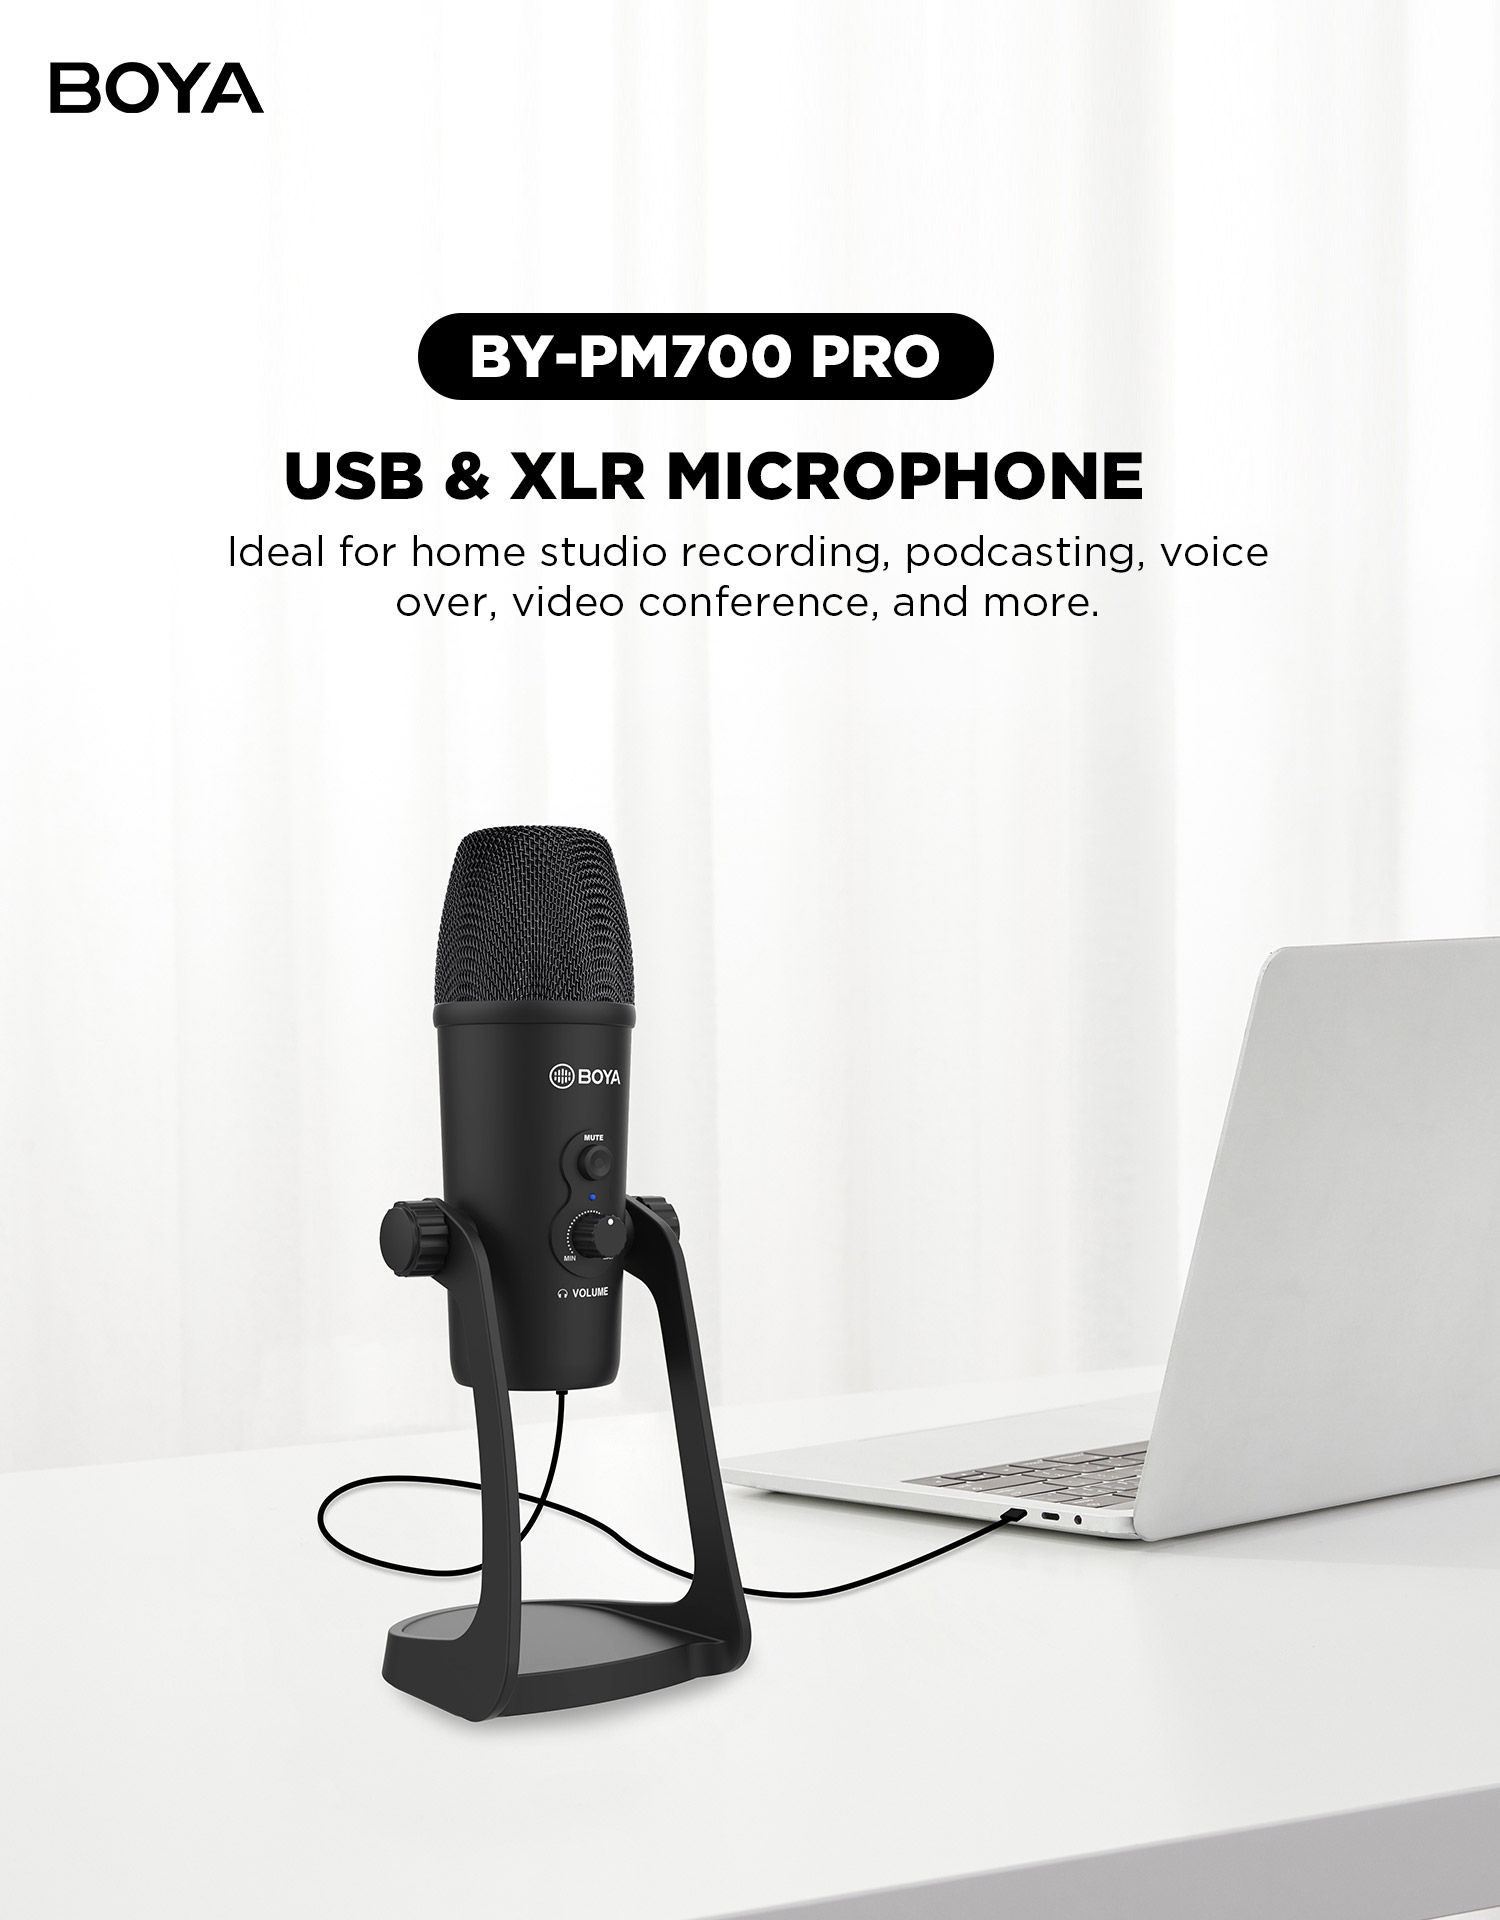 boya pm700 pro usb microphone